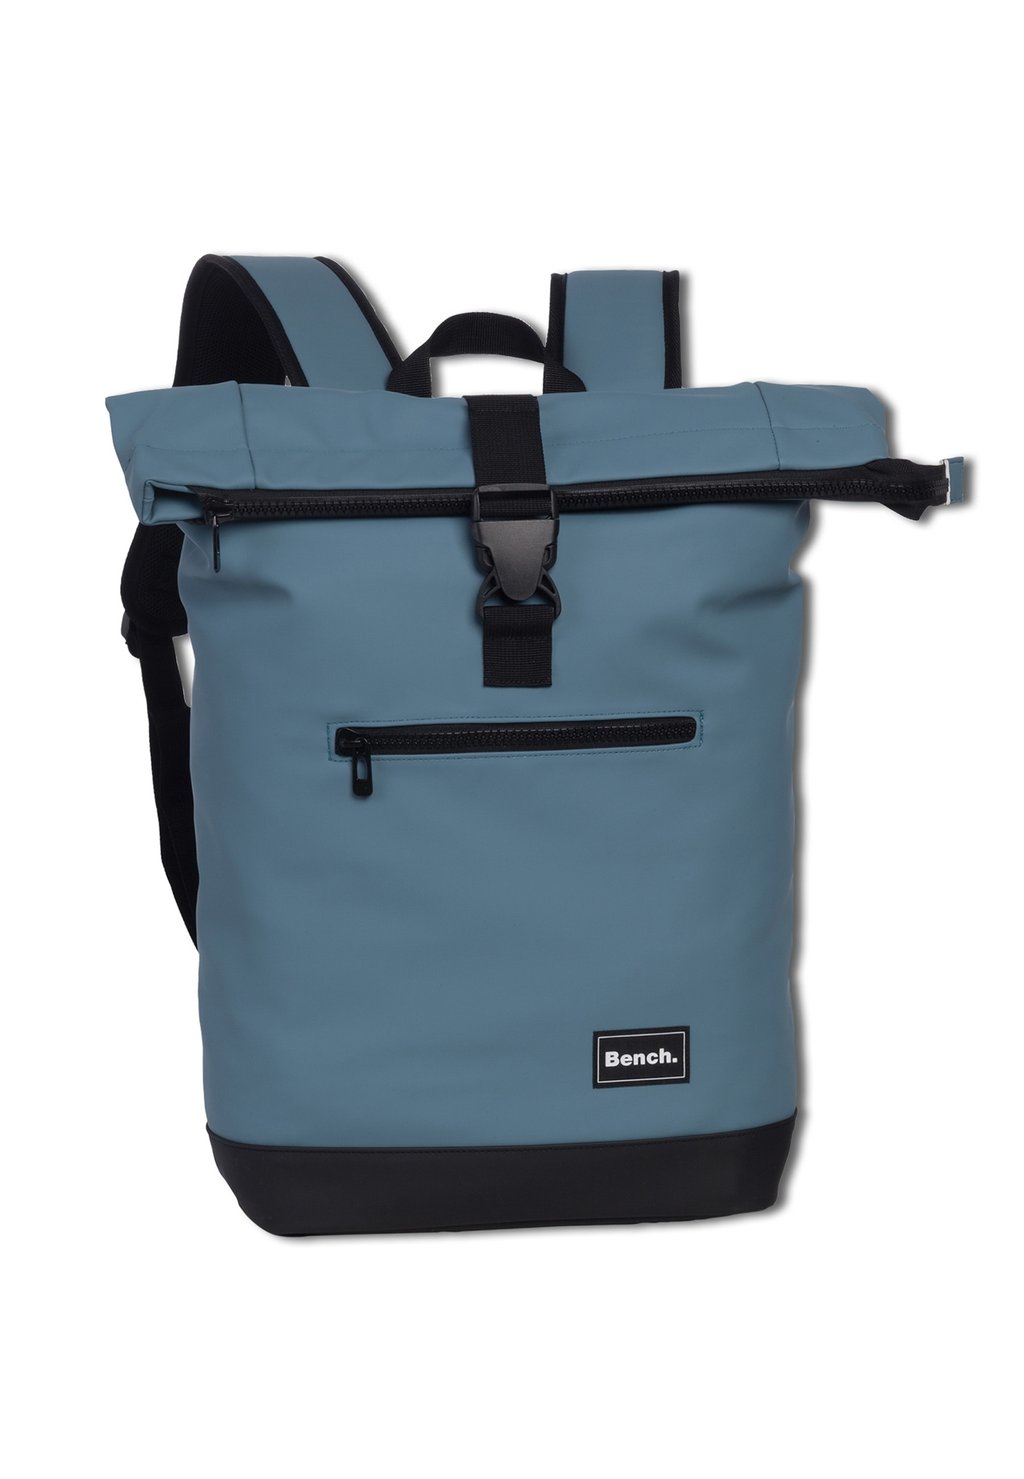 Рюкзак HYDRO KOLLEKTION FREIZEIT Bench, цвет blau/graublau цена и фото